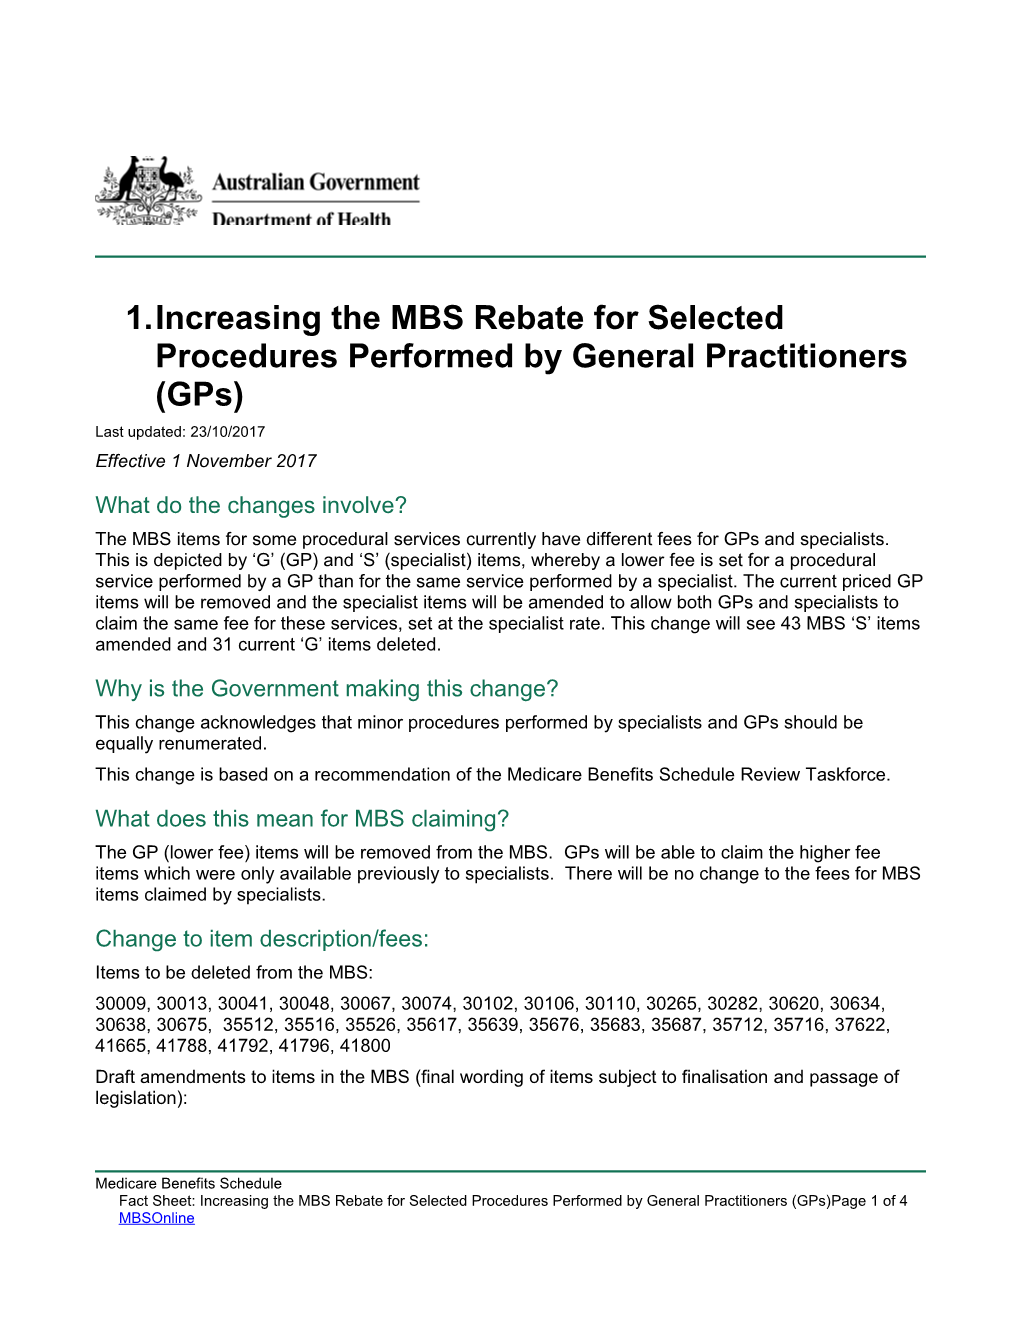 Increasing the MBS Rebate for Selected Procedures Performed by General Practitioners (Gps)